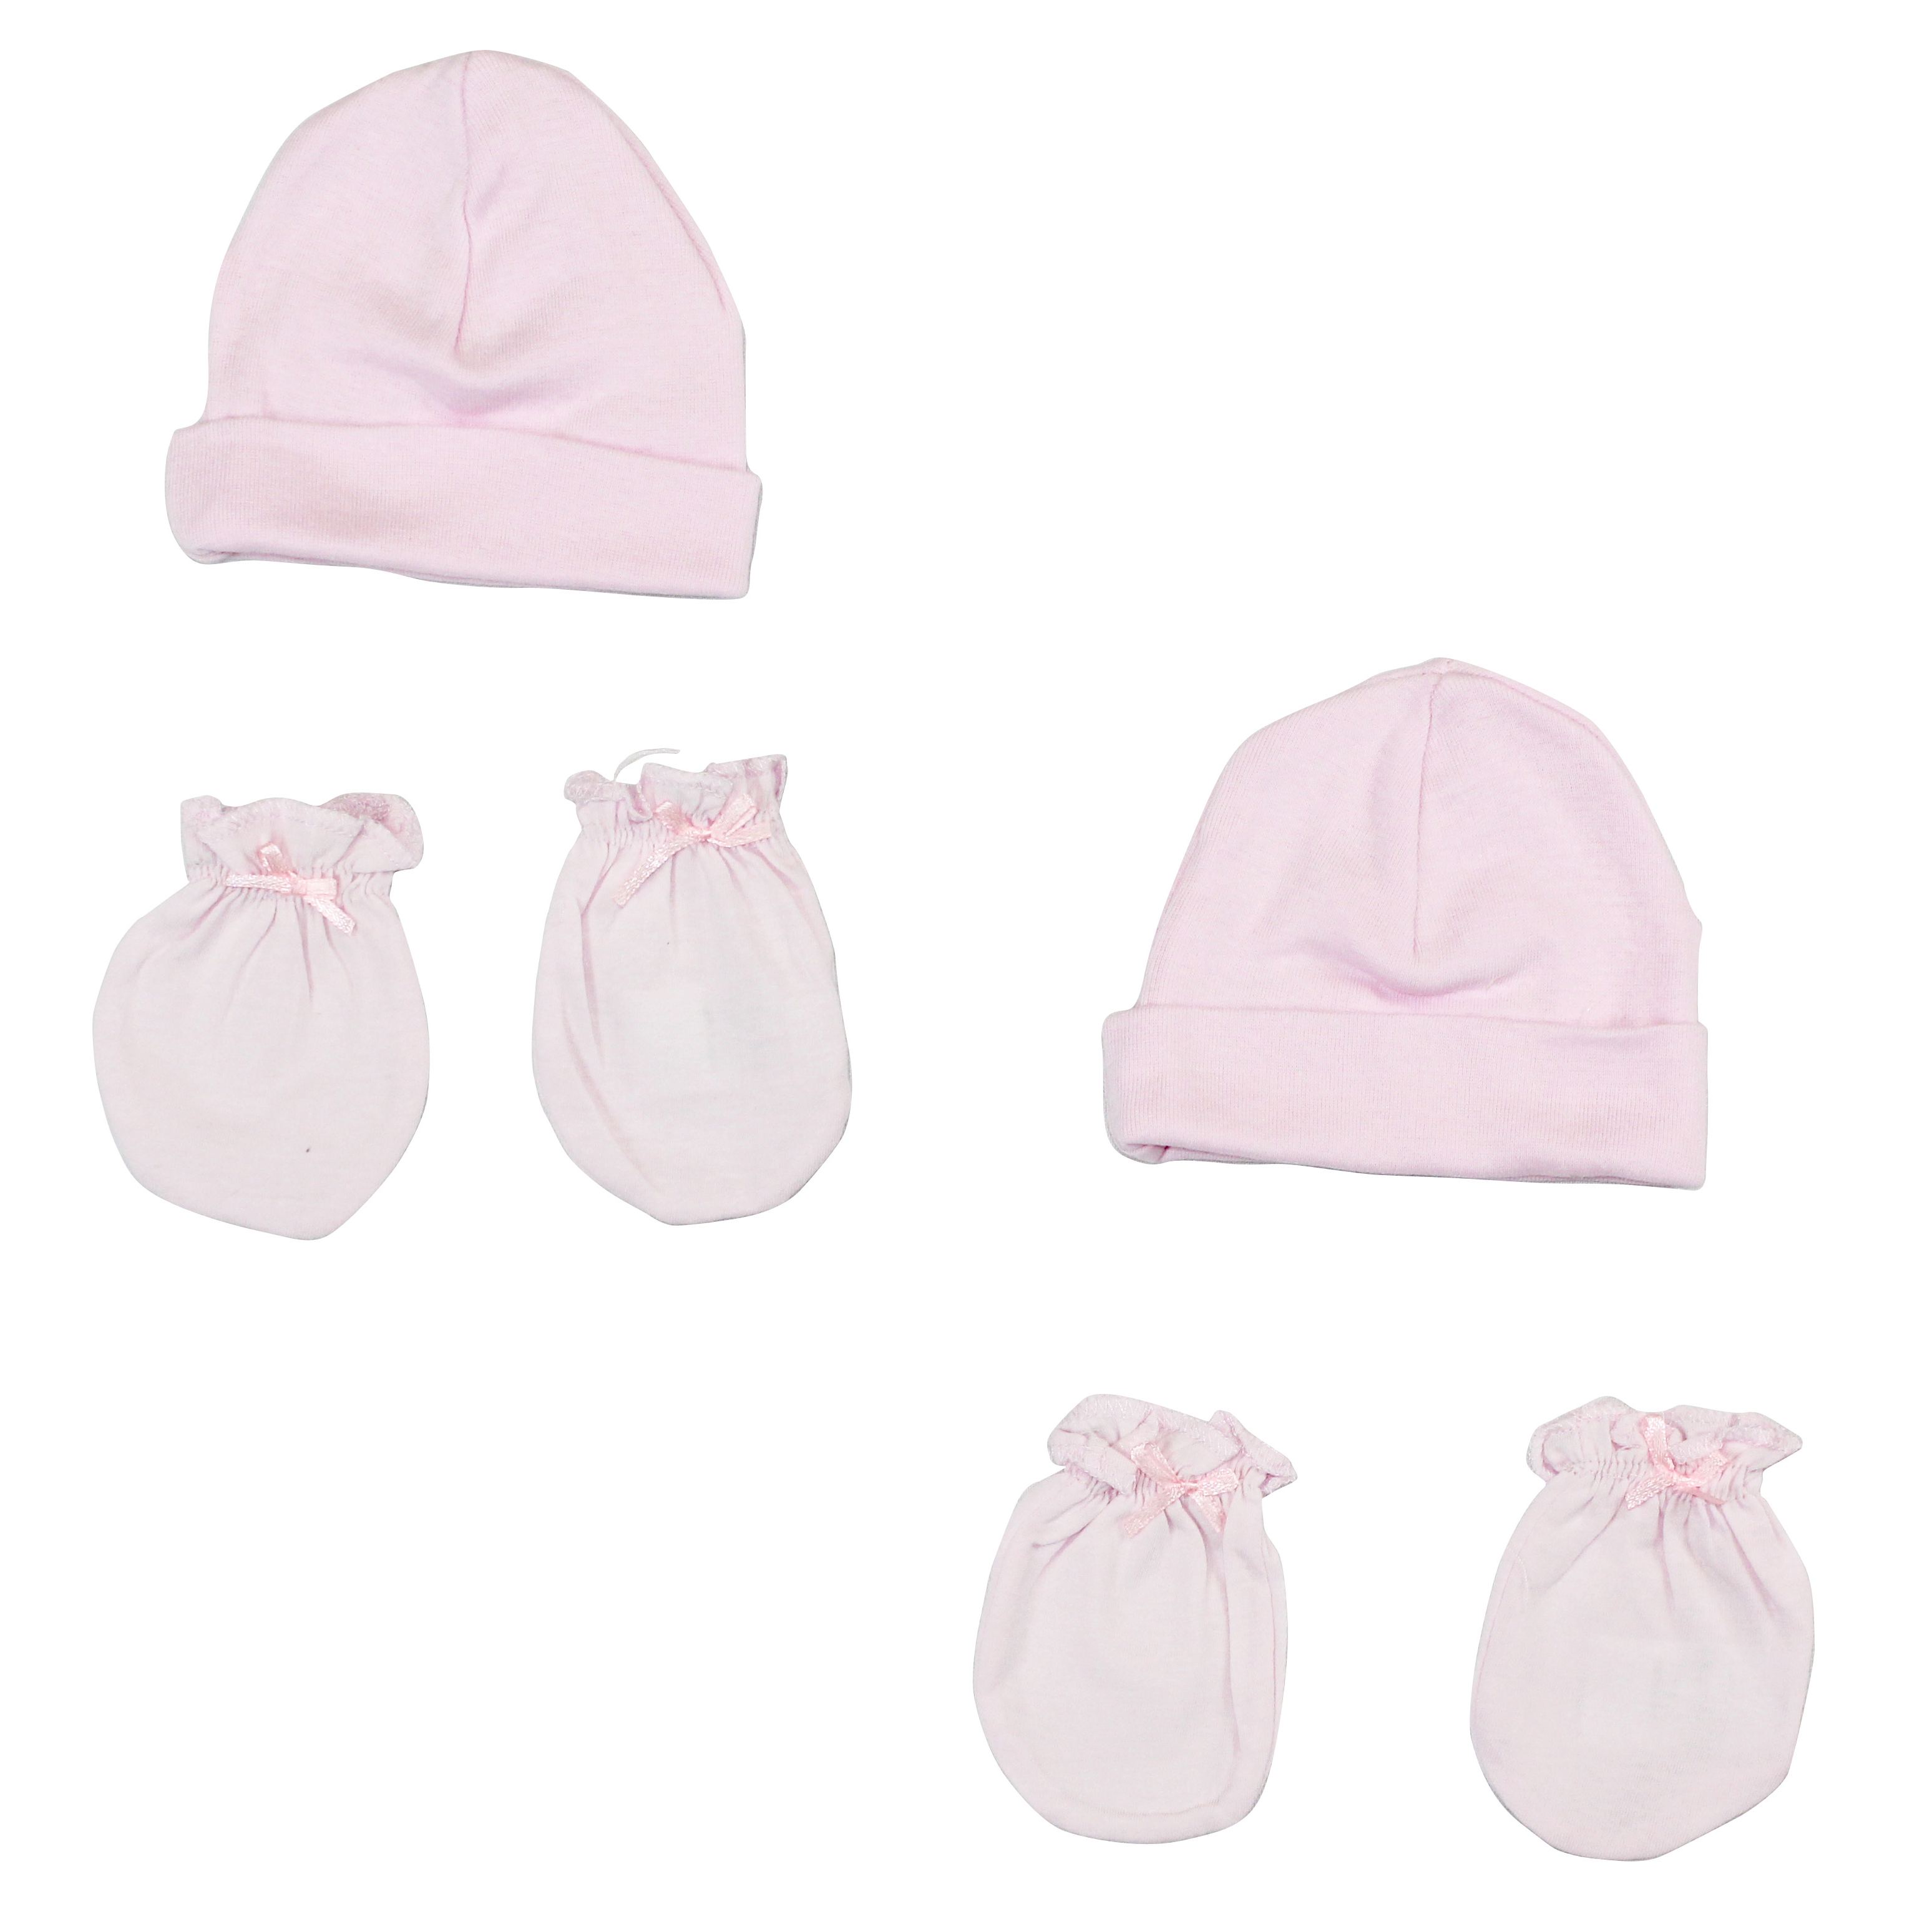 Bambini Girls' Cap and Mittens 4 Piece Layette Set - Newborn